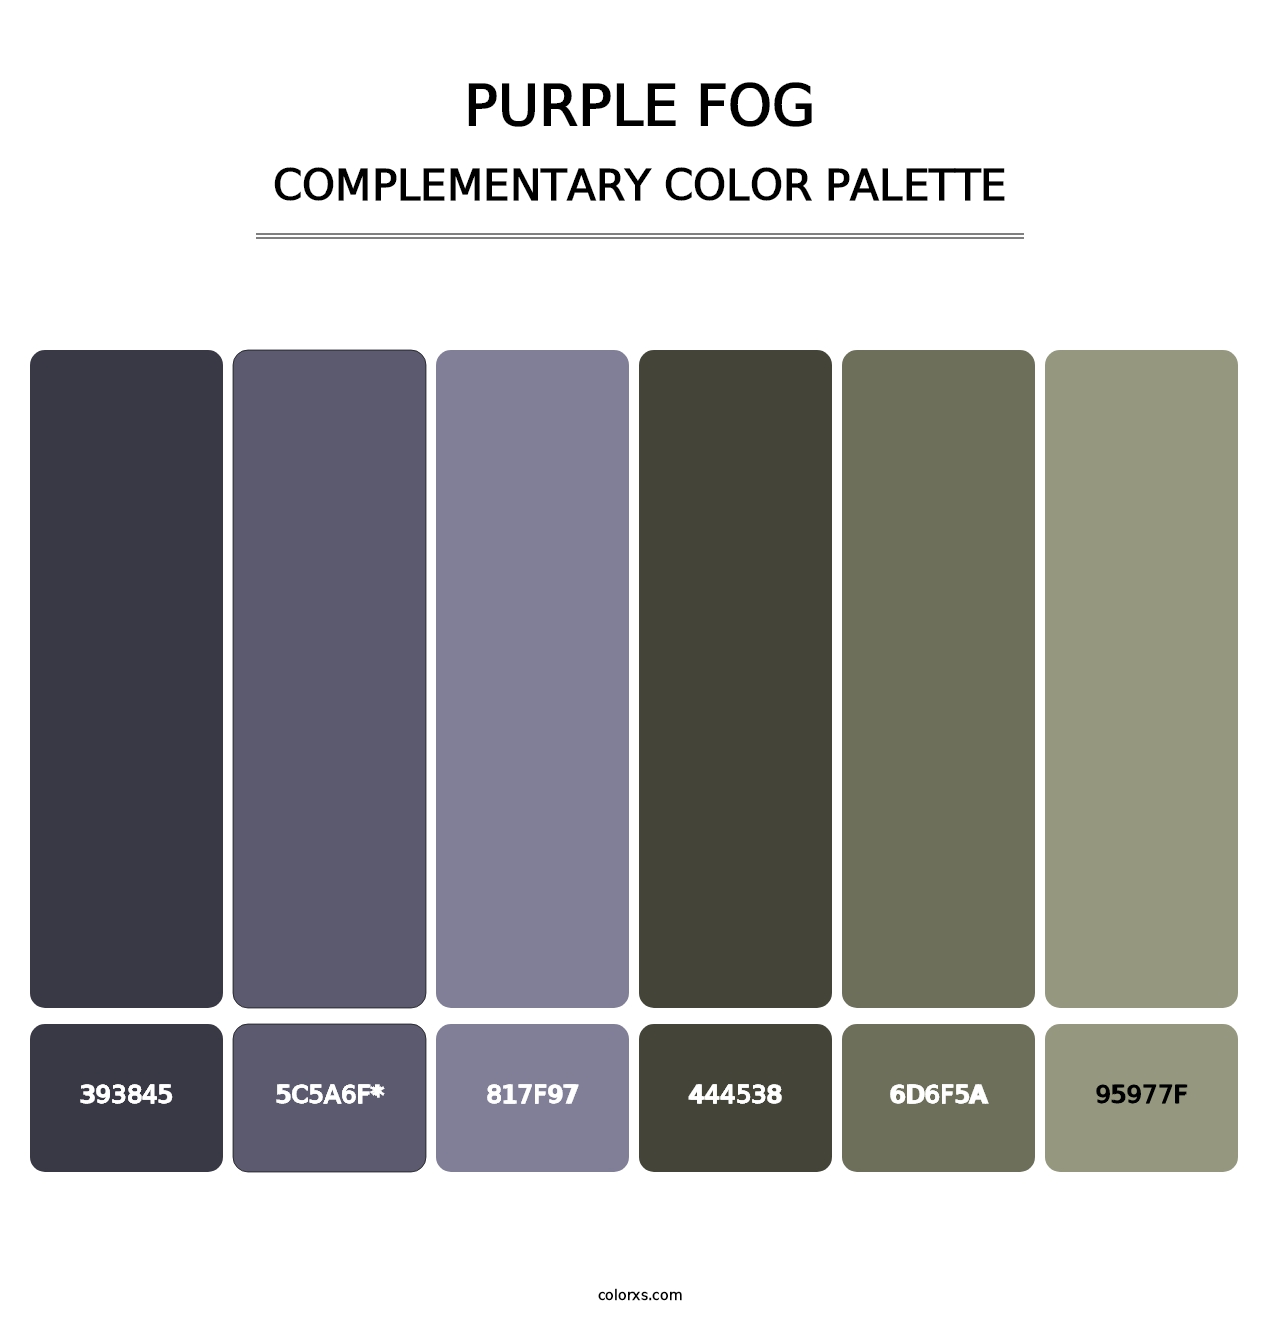 Purple Fog - Complementary Color Palette